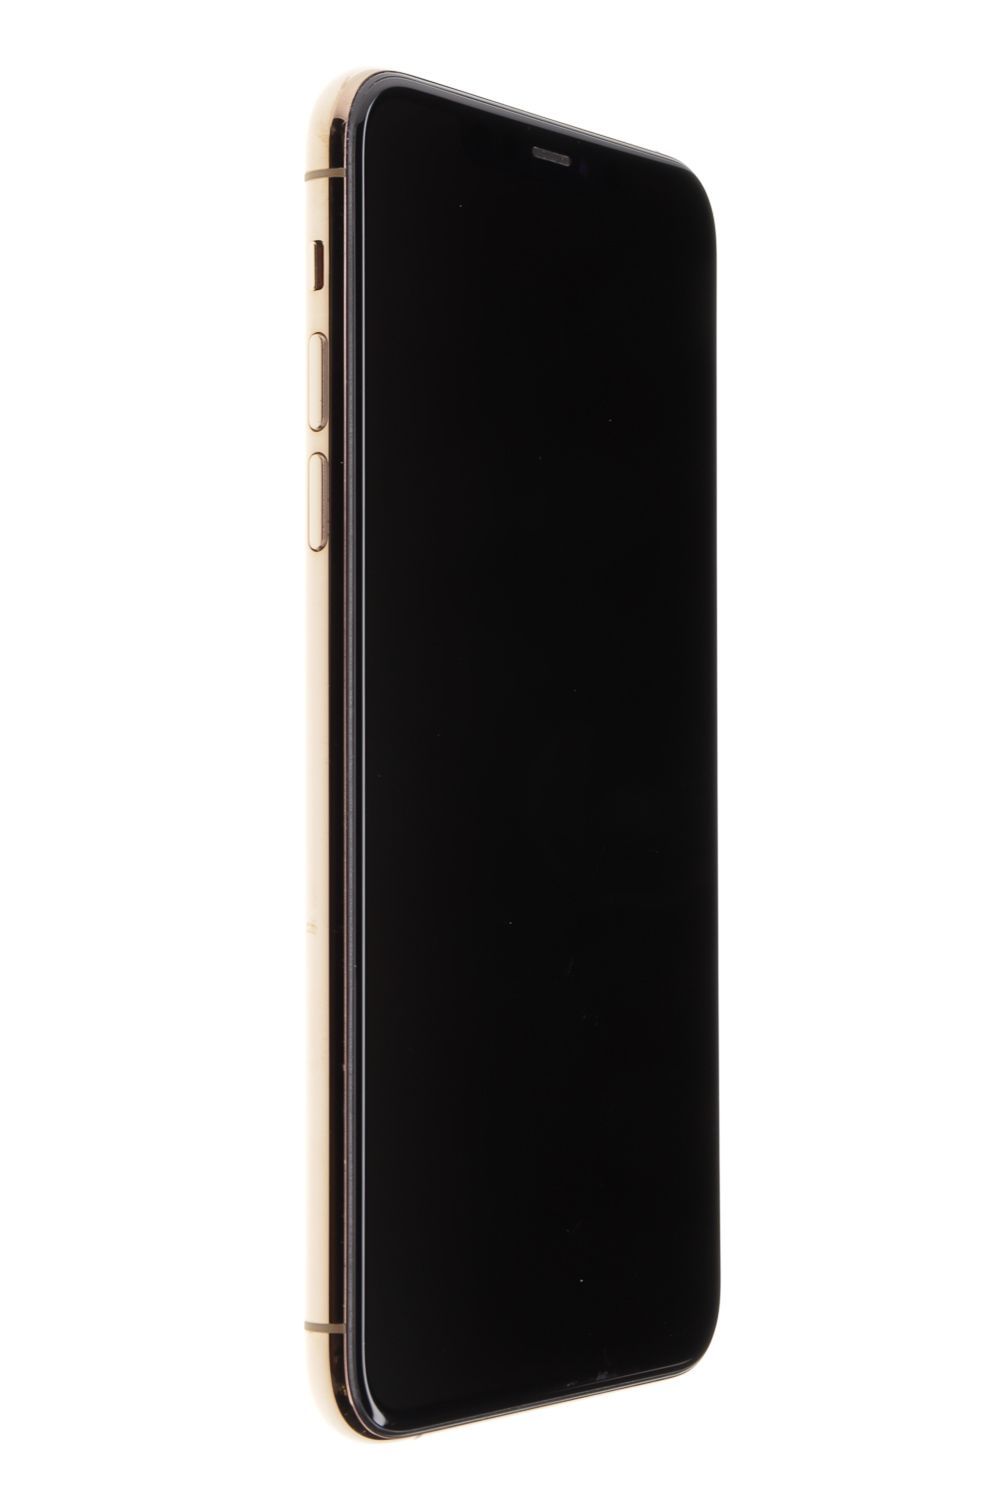 Mobiltelefon Apple iPhone 11 Pro Max, Gold, 64 GB, Excelent